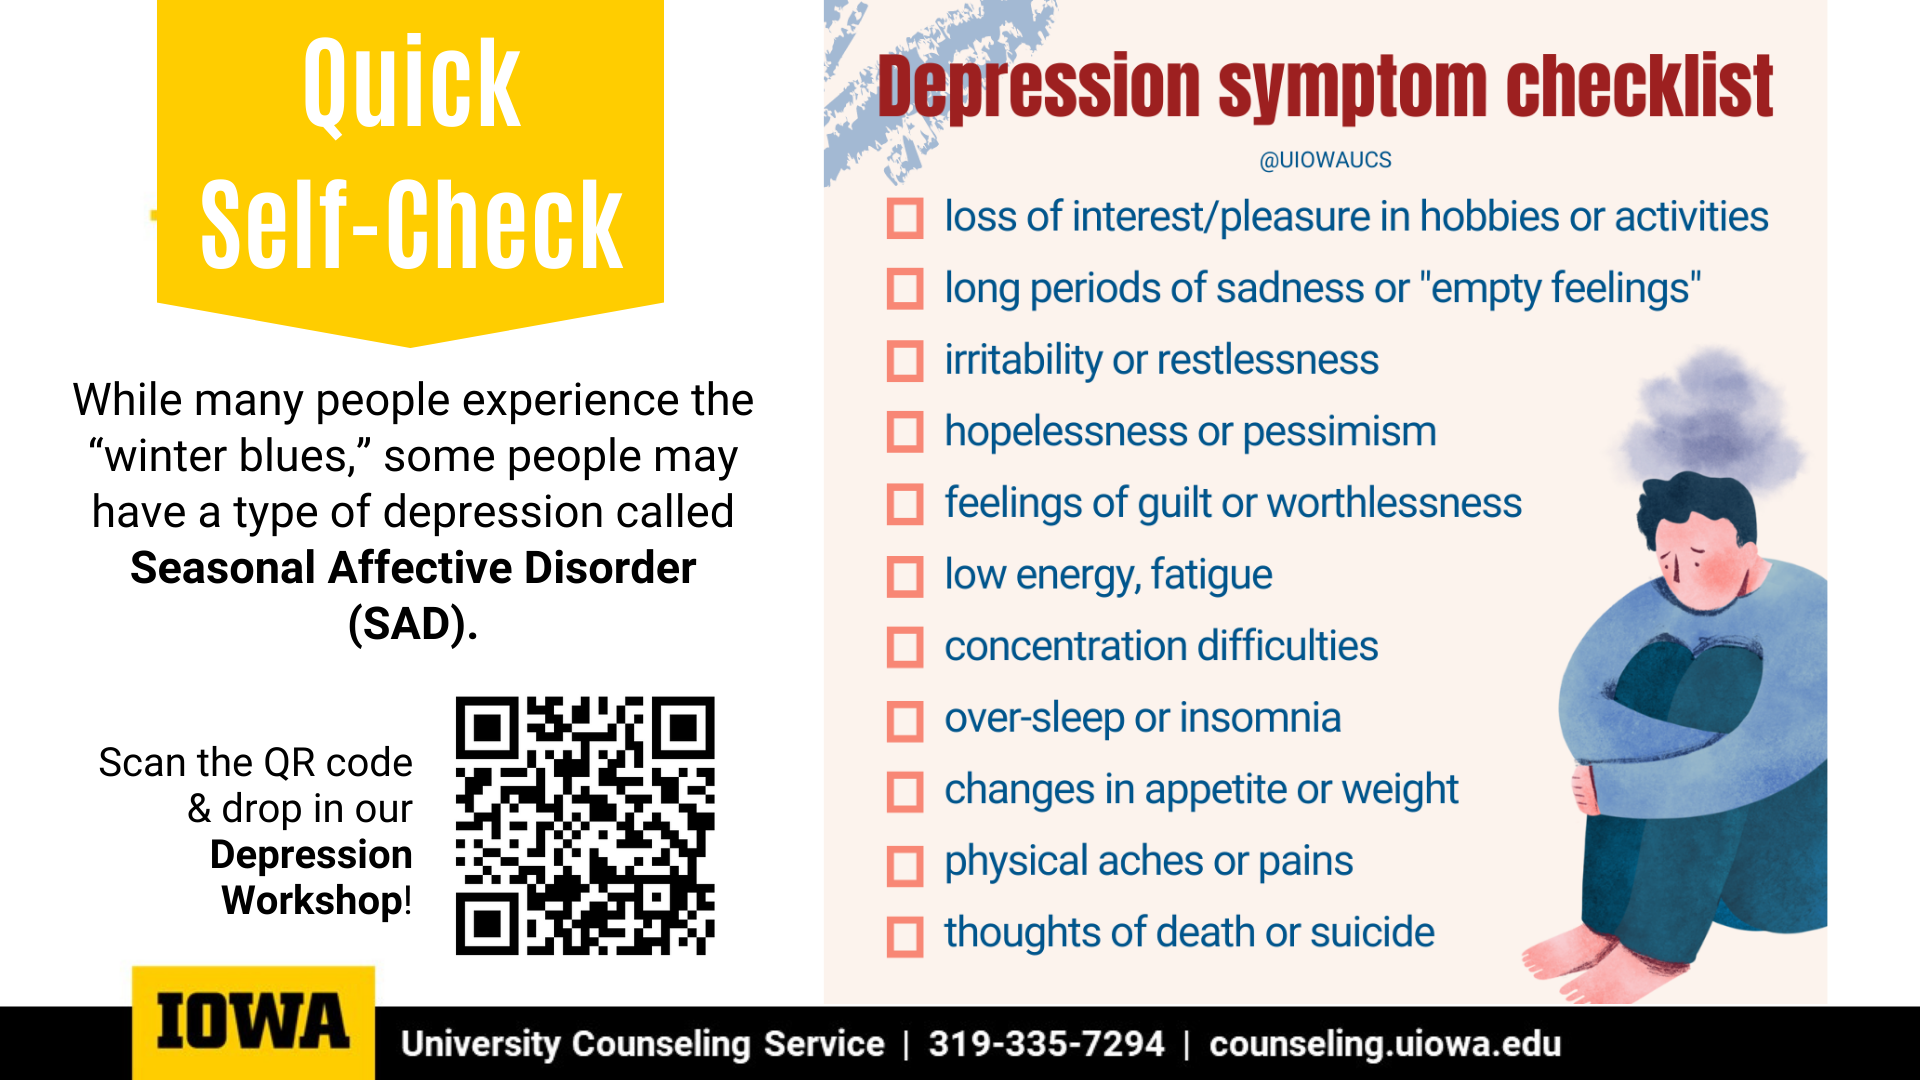 Depression checklist